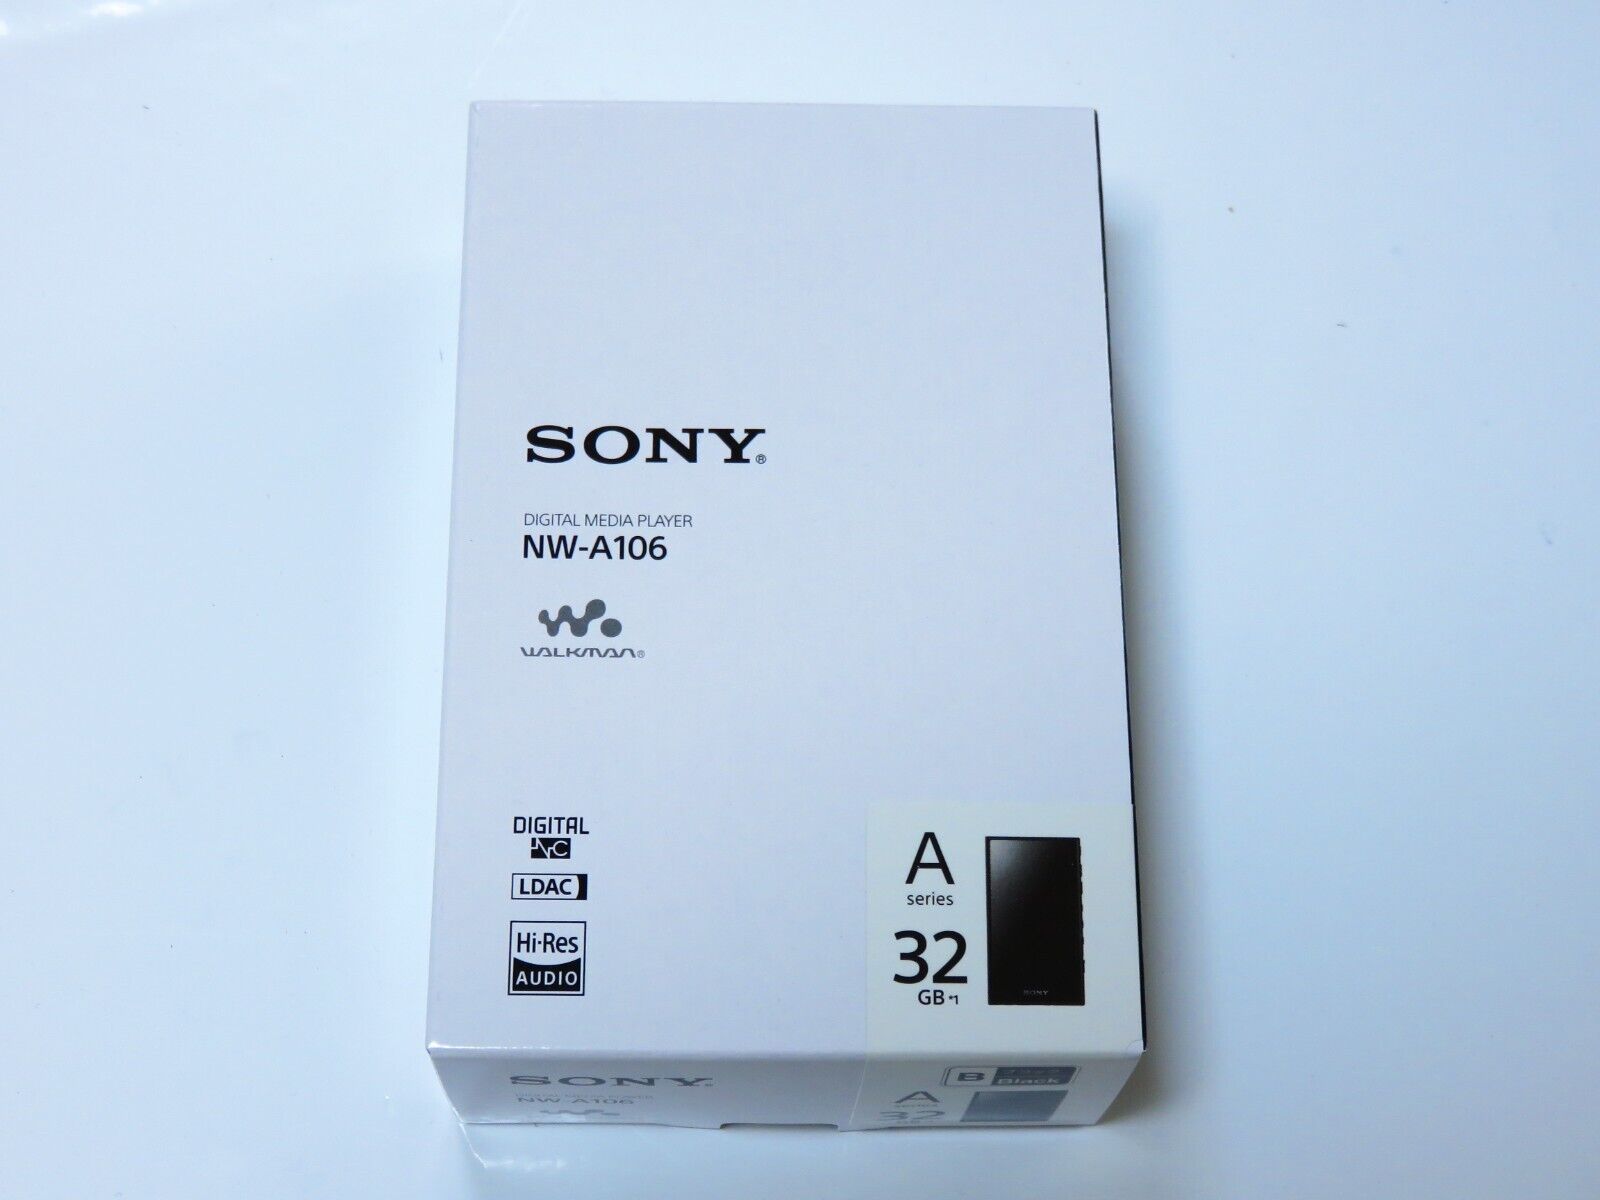 SONY Walkman 32GB A Series NW-A106 B Black New in Box 4548736104082 | eBay